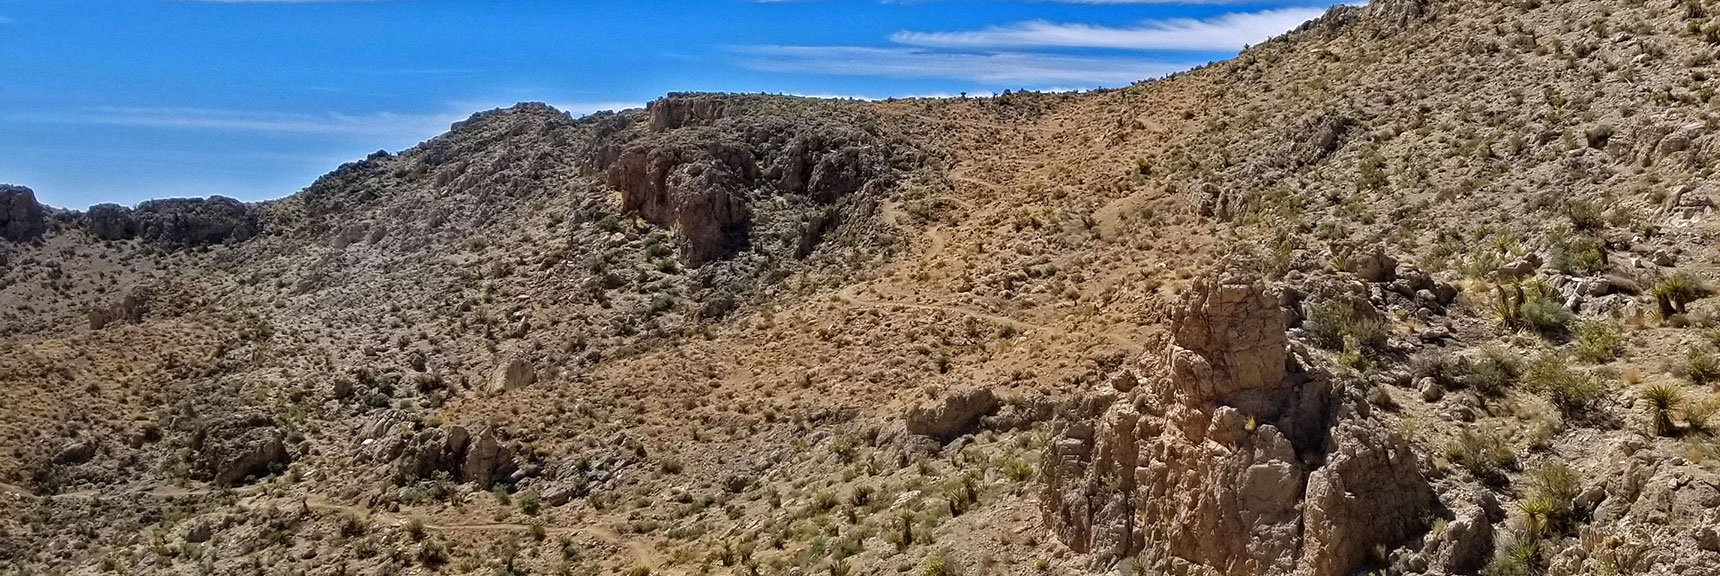 Wicked Gardens Trail Switchbacks to Summit of Little Red Rock Ridge Overlook | Little La Madre Mt, Little El Padre Mt, Little Burnt Peak | Near La Madre Mountains Wilderness, Nevada